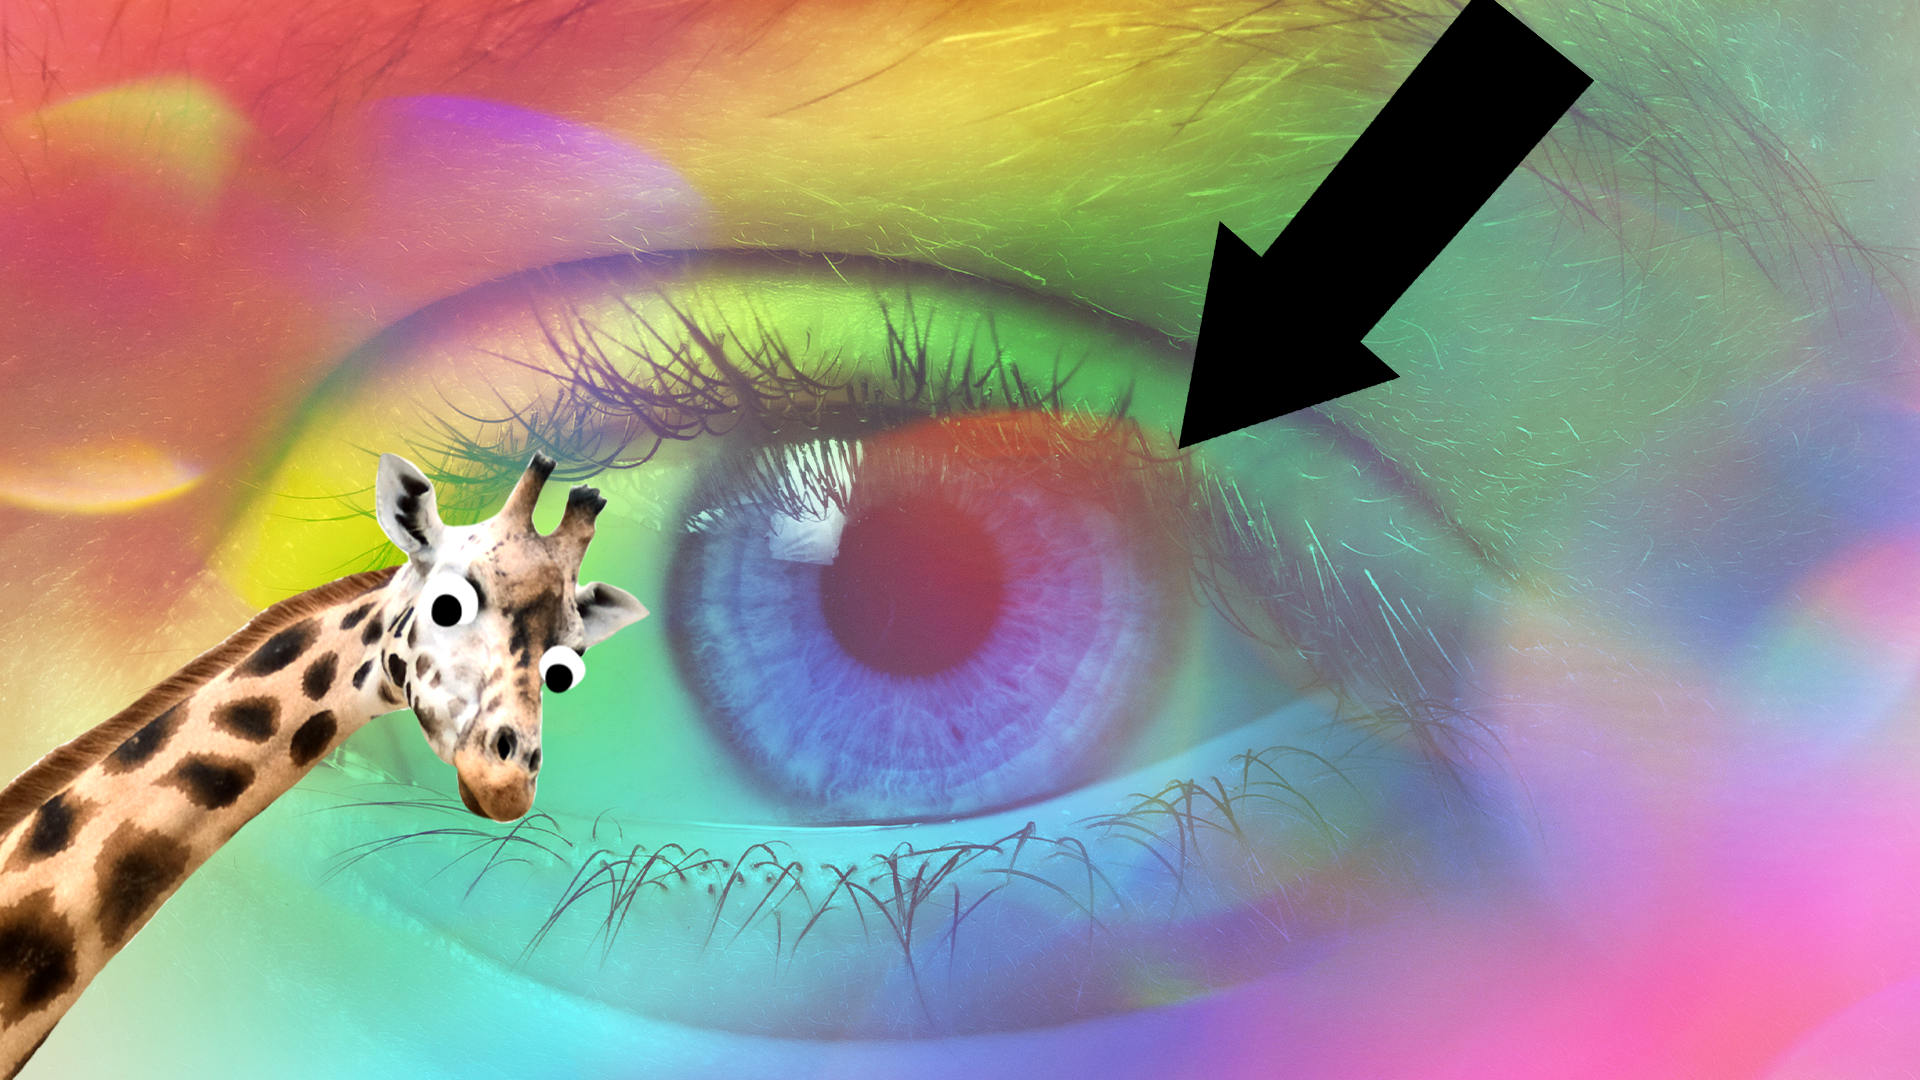 Colourful eye closeup with black arrow and derpy giraffe